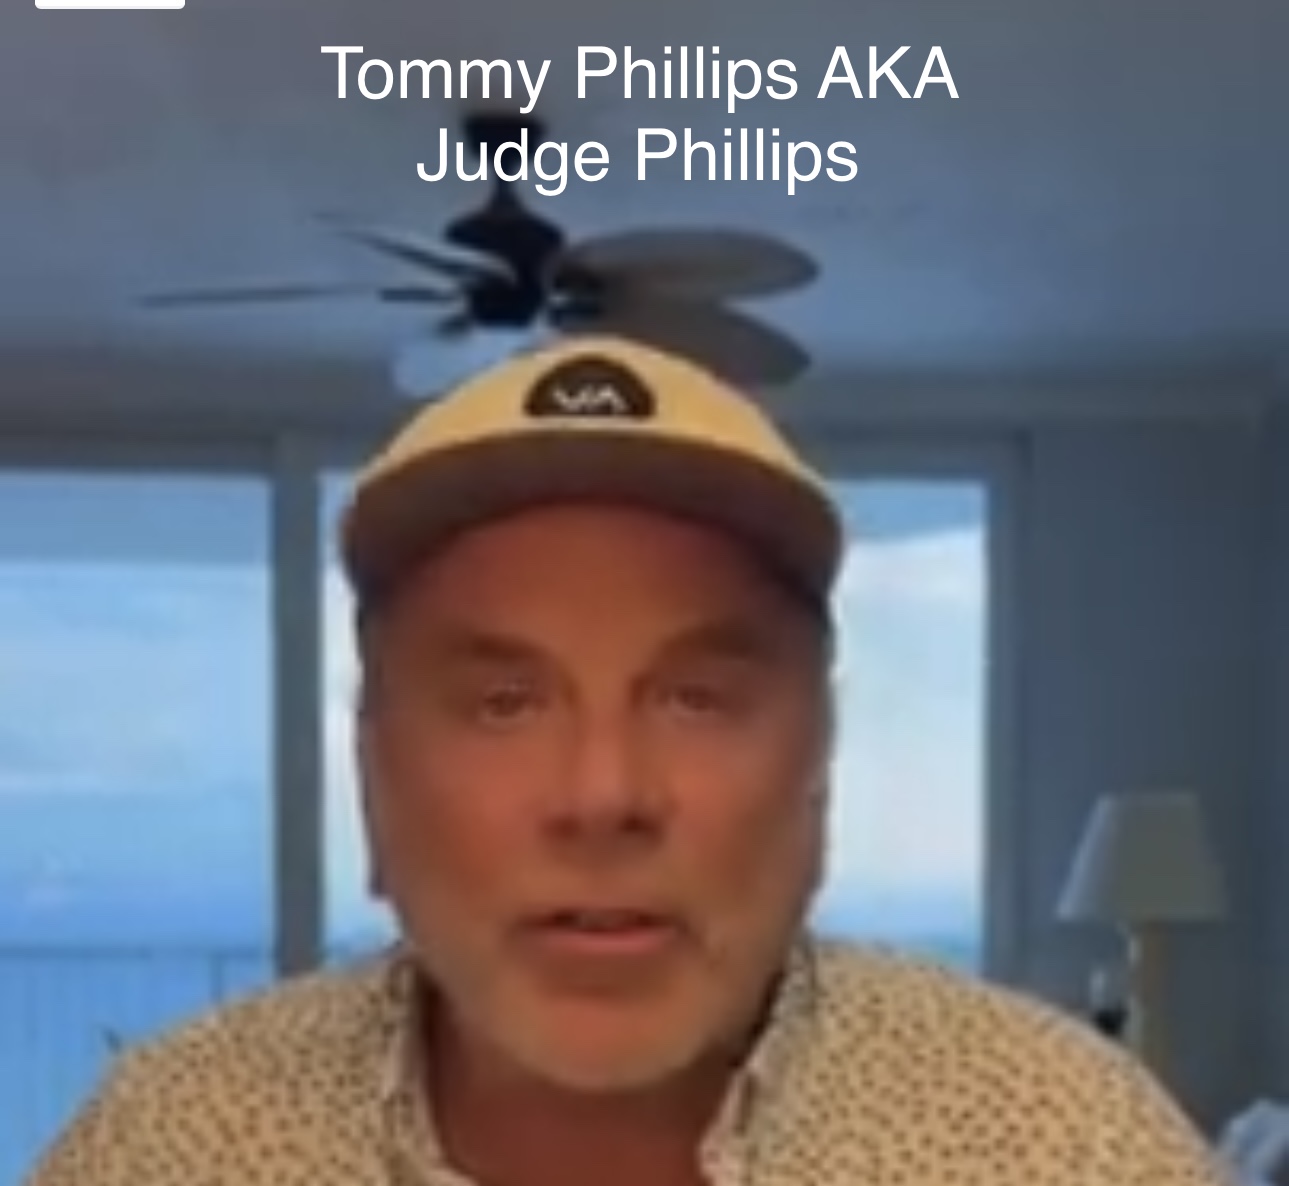 TOMMY AKA "JUDGE" PHILLIPS